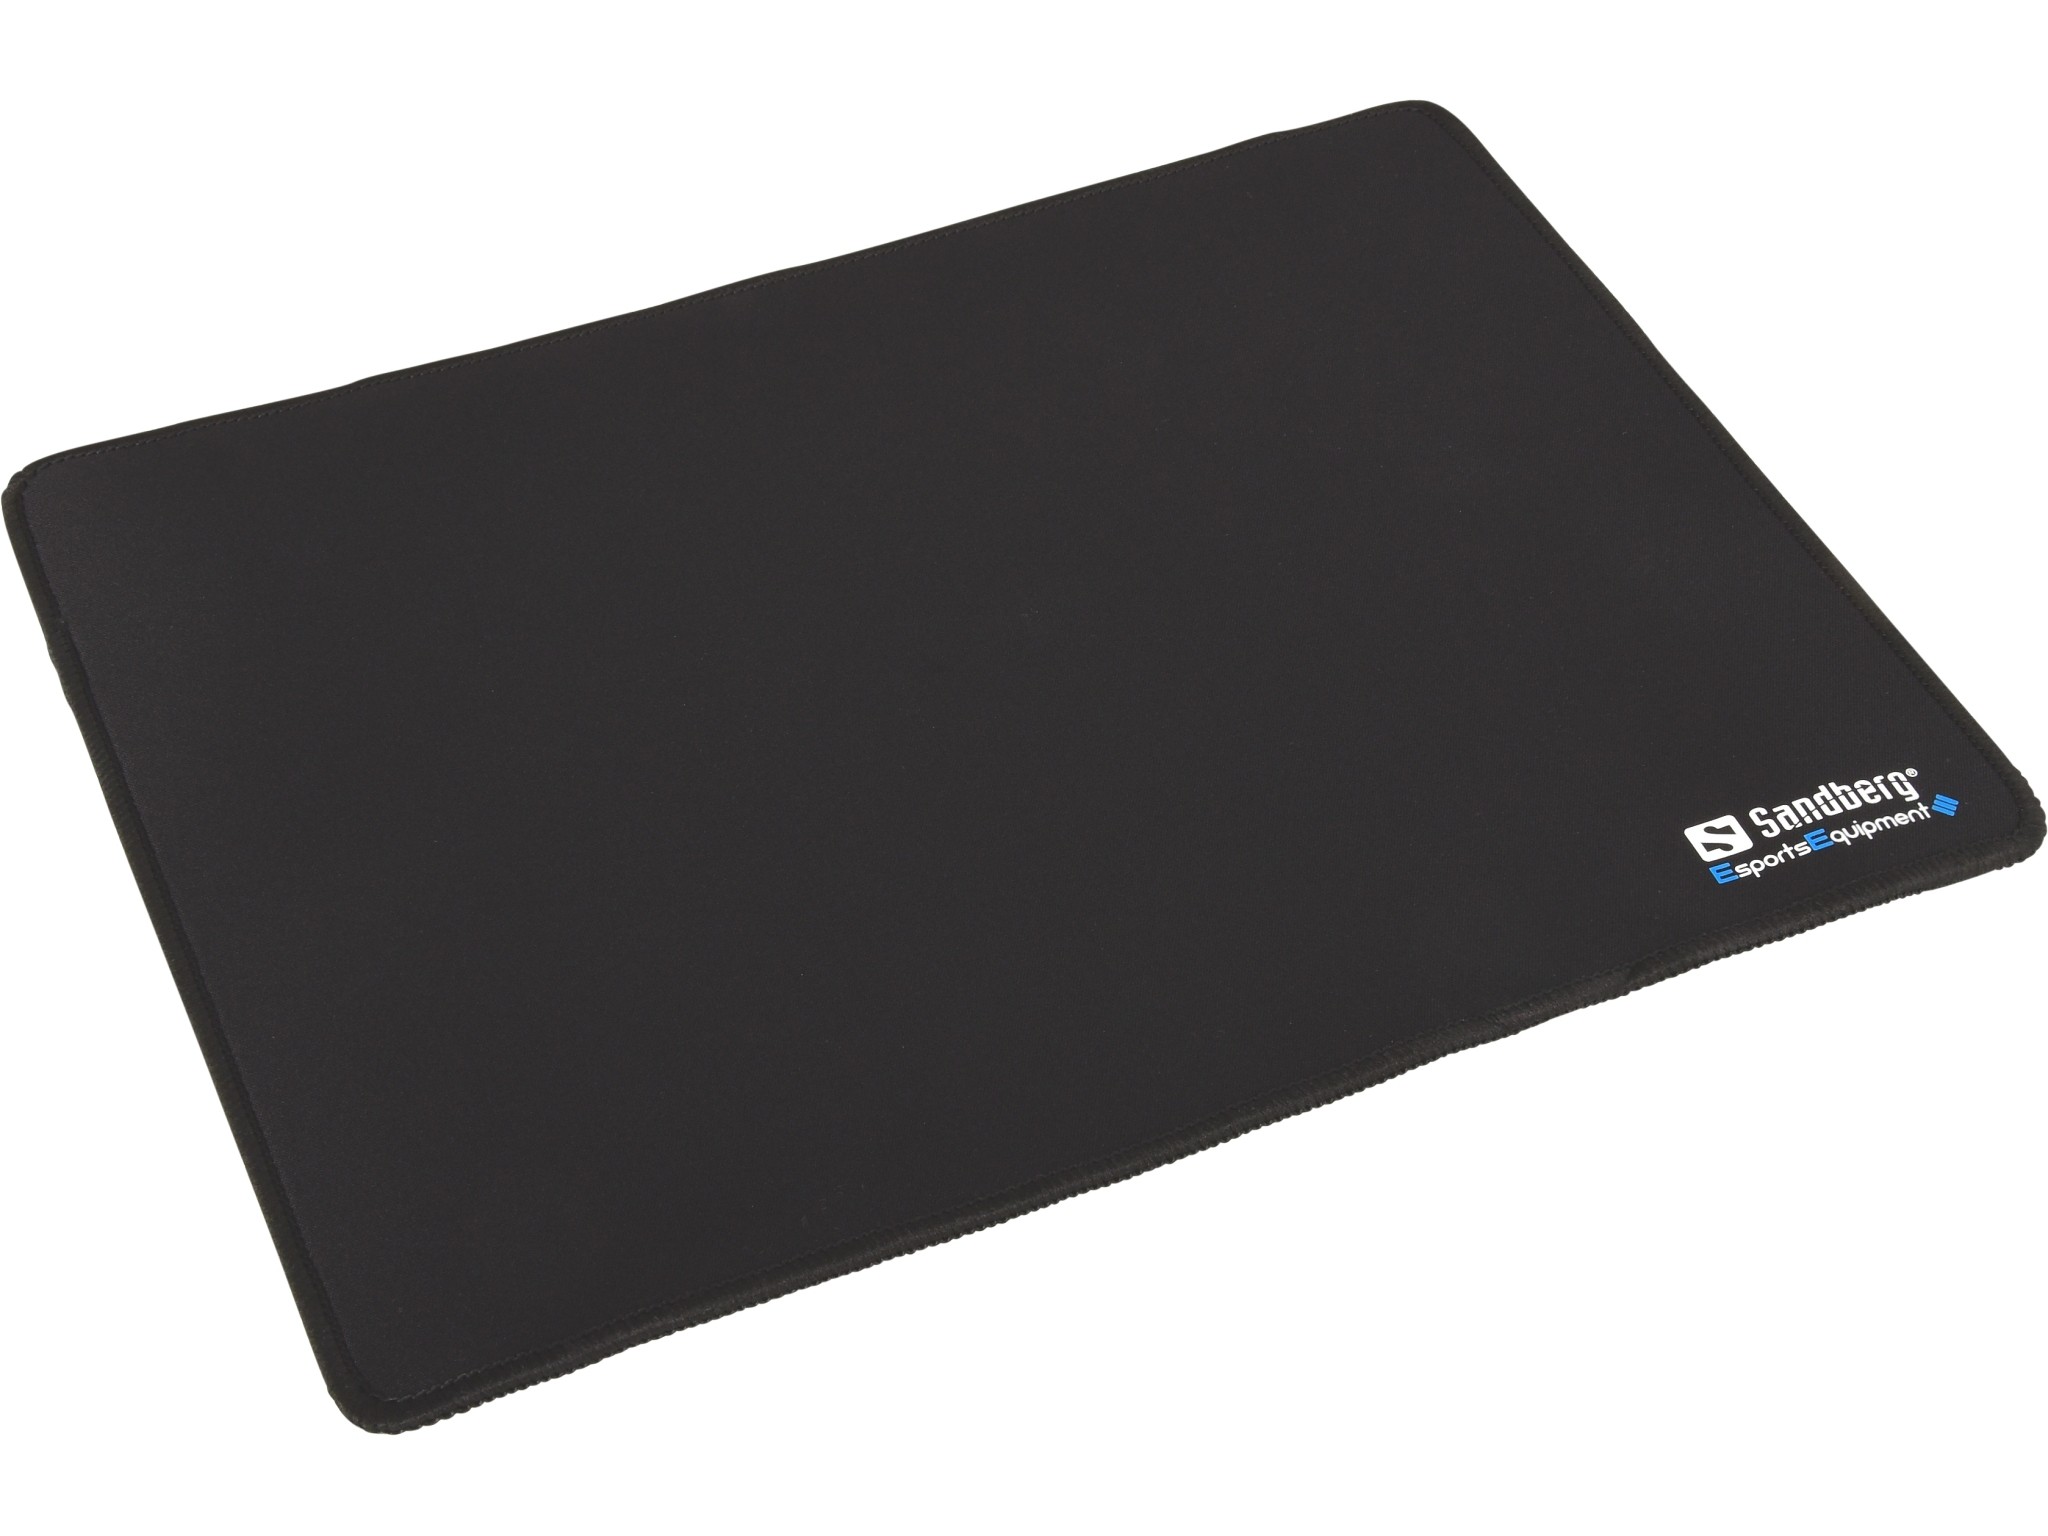 mouse pad gaming sandberg 520-32, negru